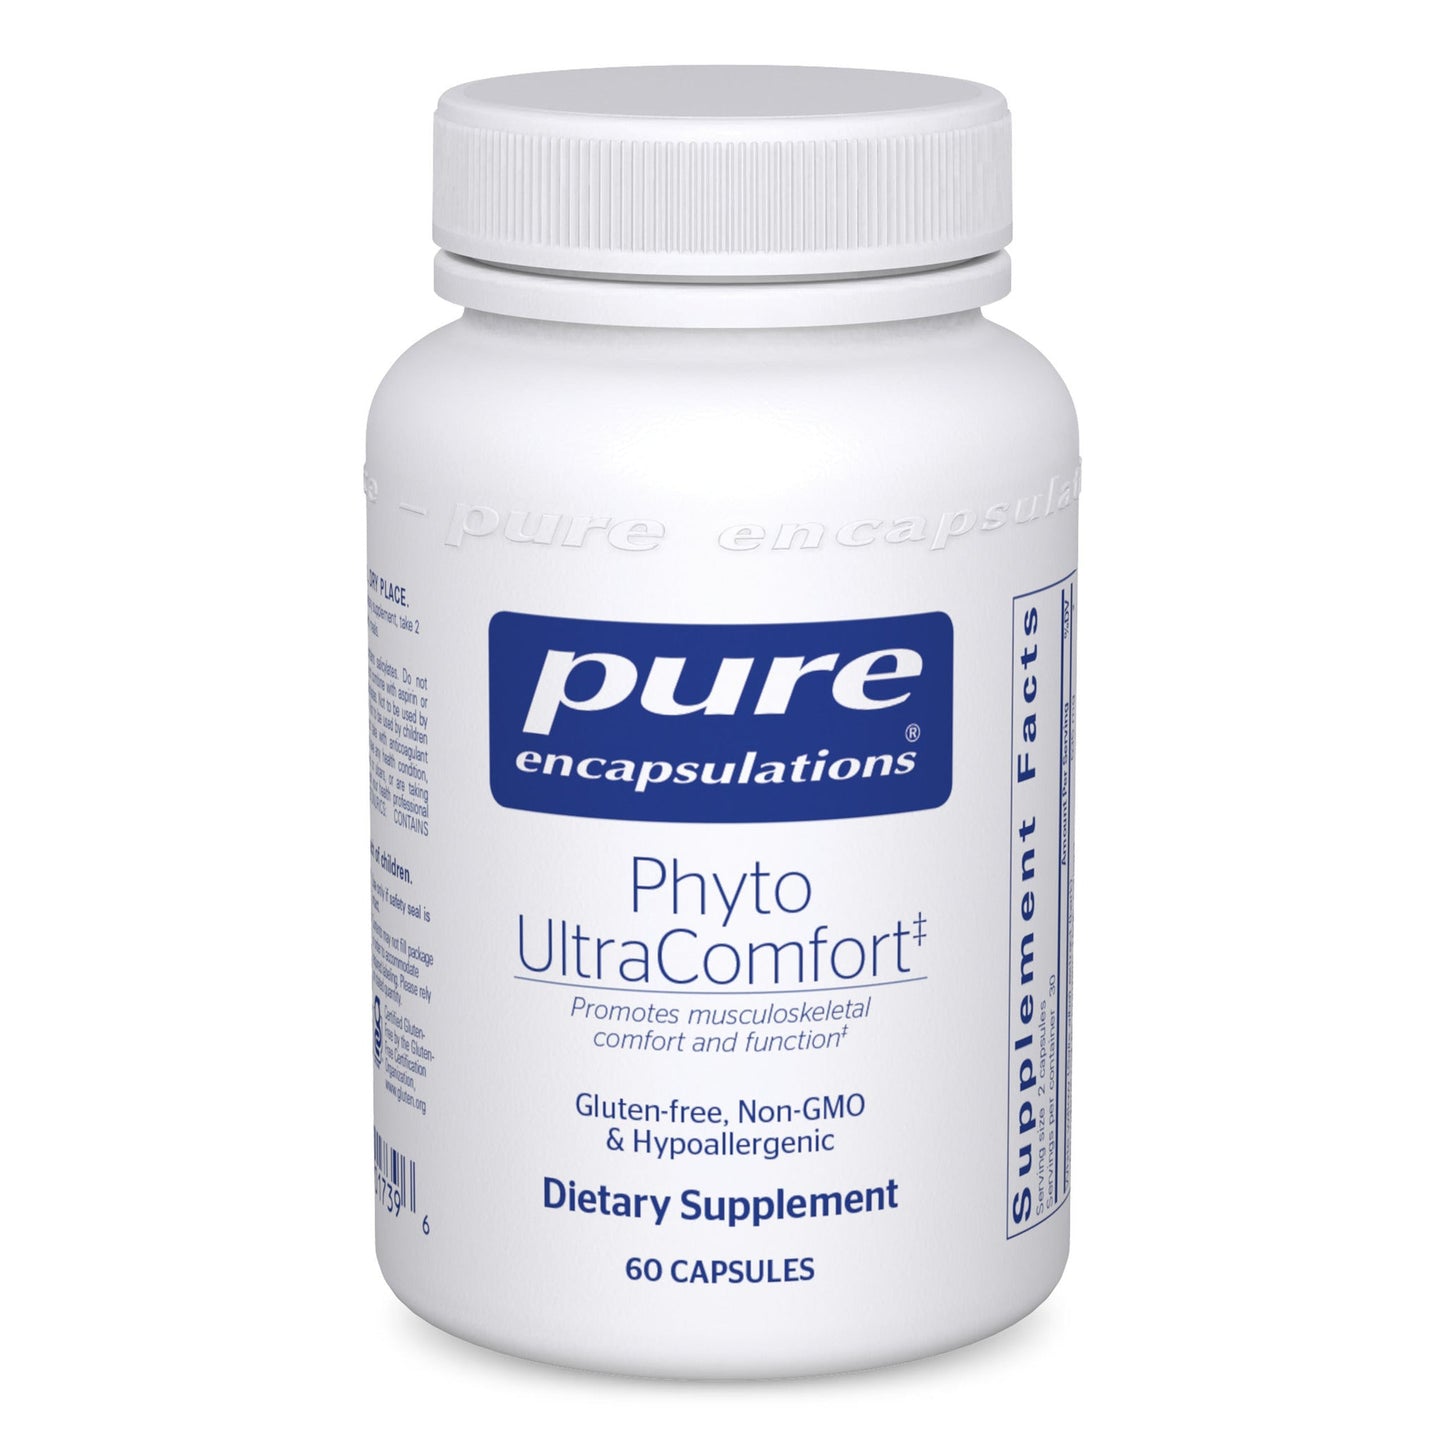 Phyto UltraComfort